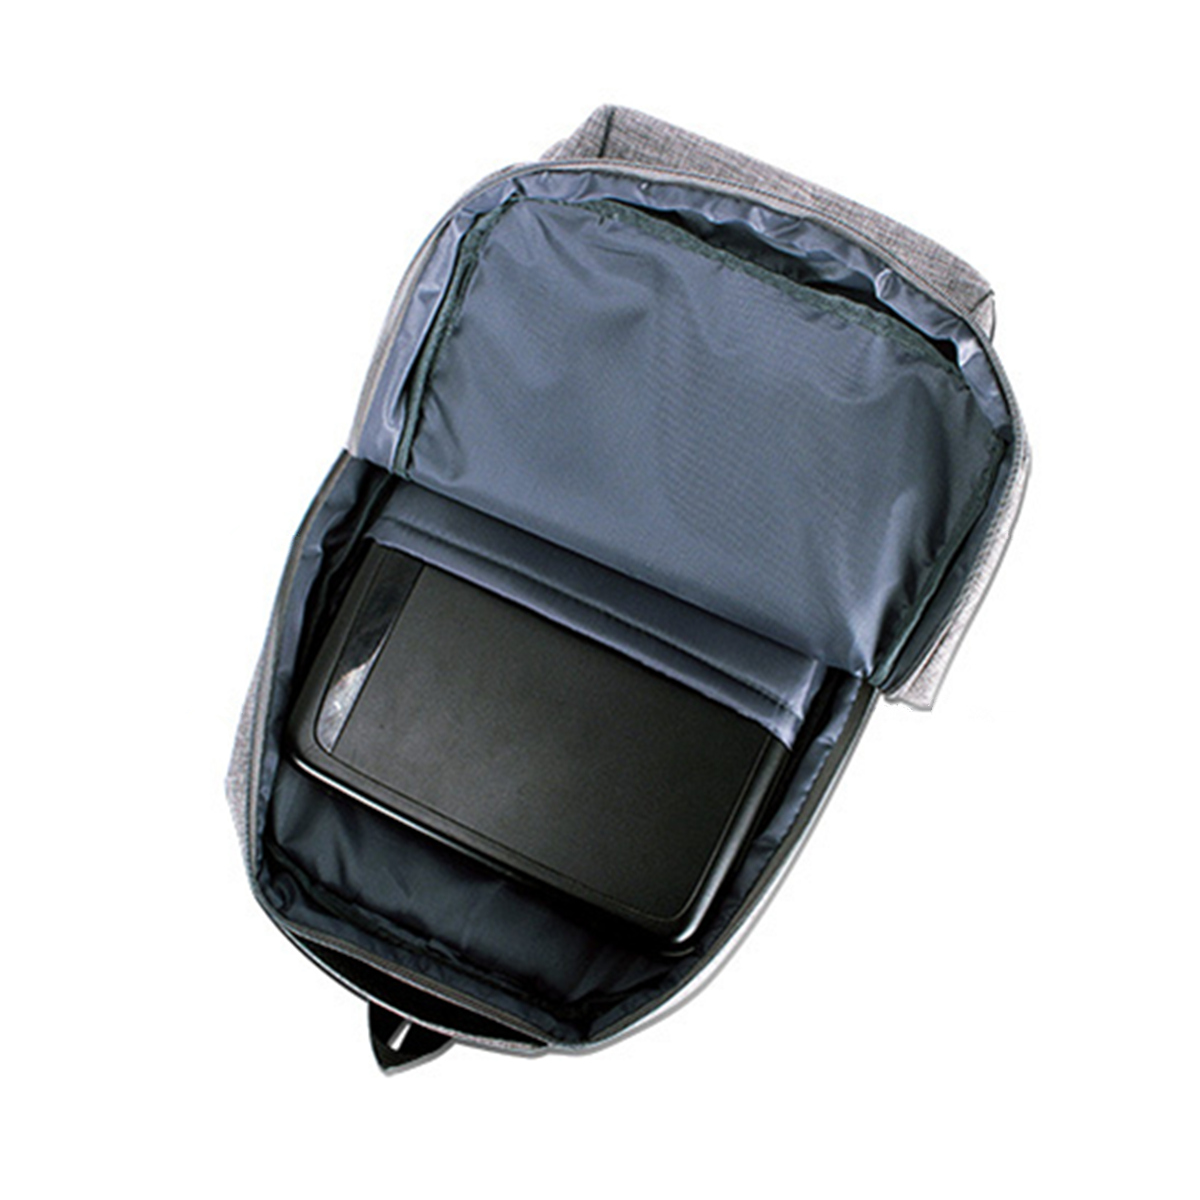 IPReereg-156inch-Men-Laptop-Canvas-Backpack-School-Business-Travel-Shoulder-Bag-Rucksack-1193578-10